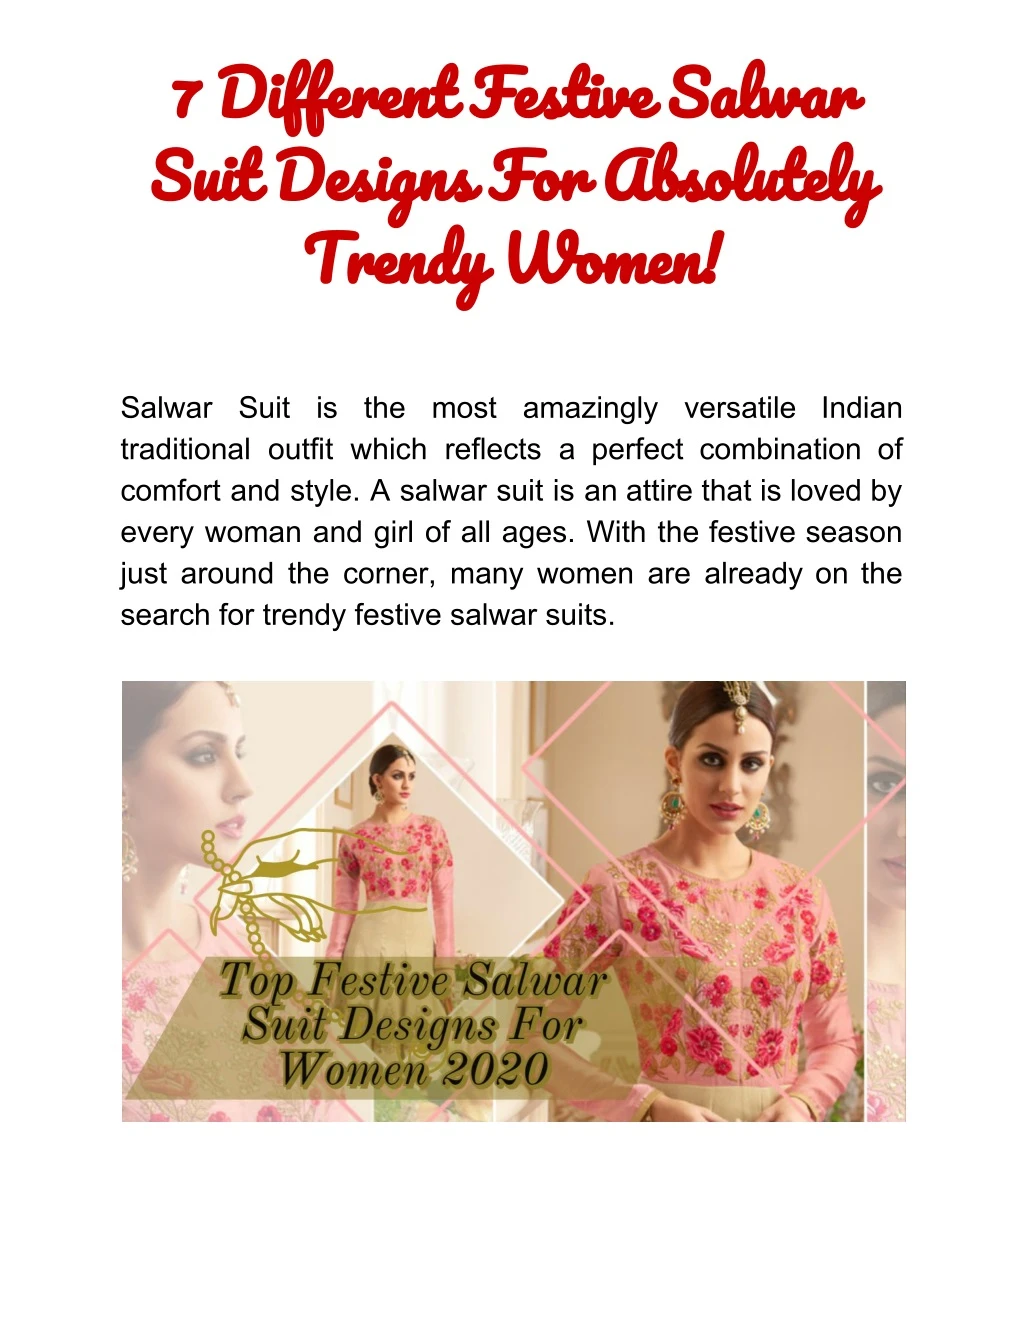 7 different festive salwar suit designs